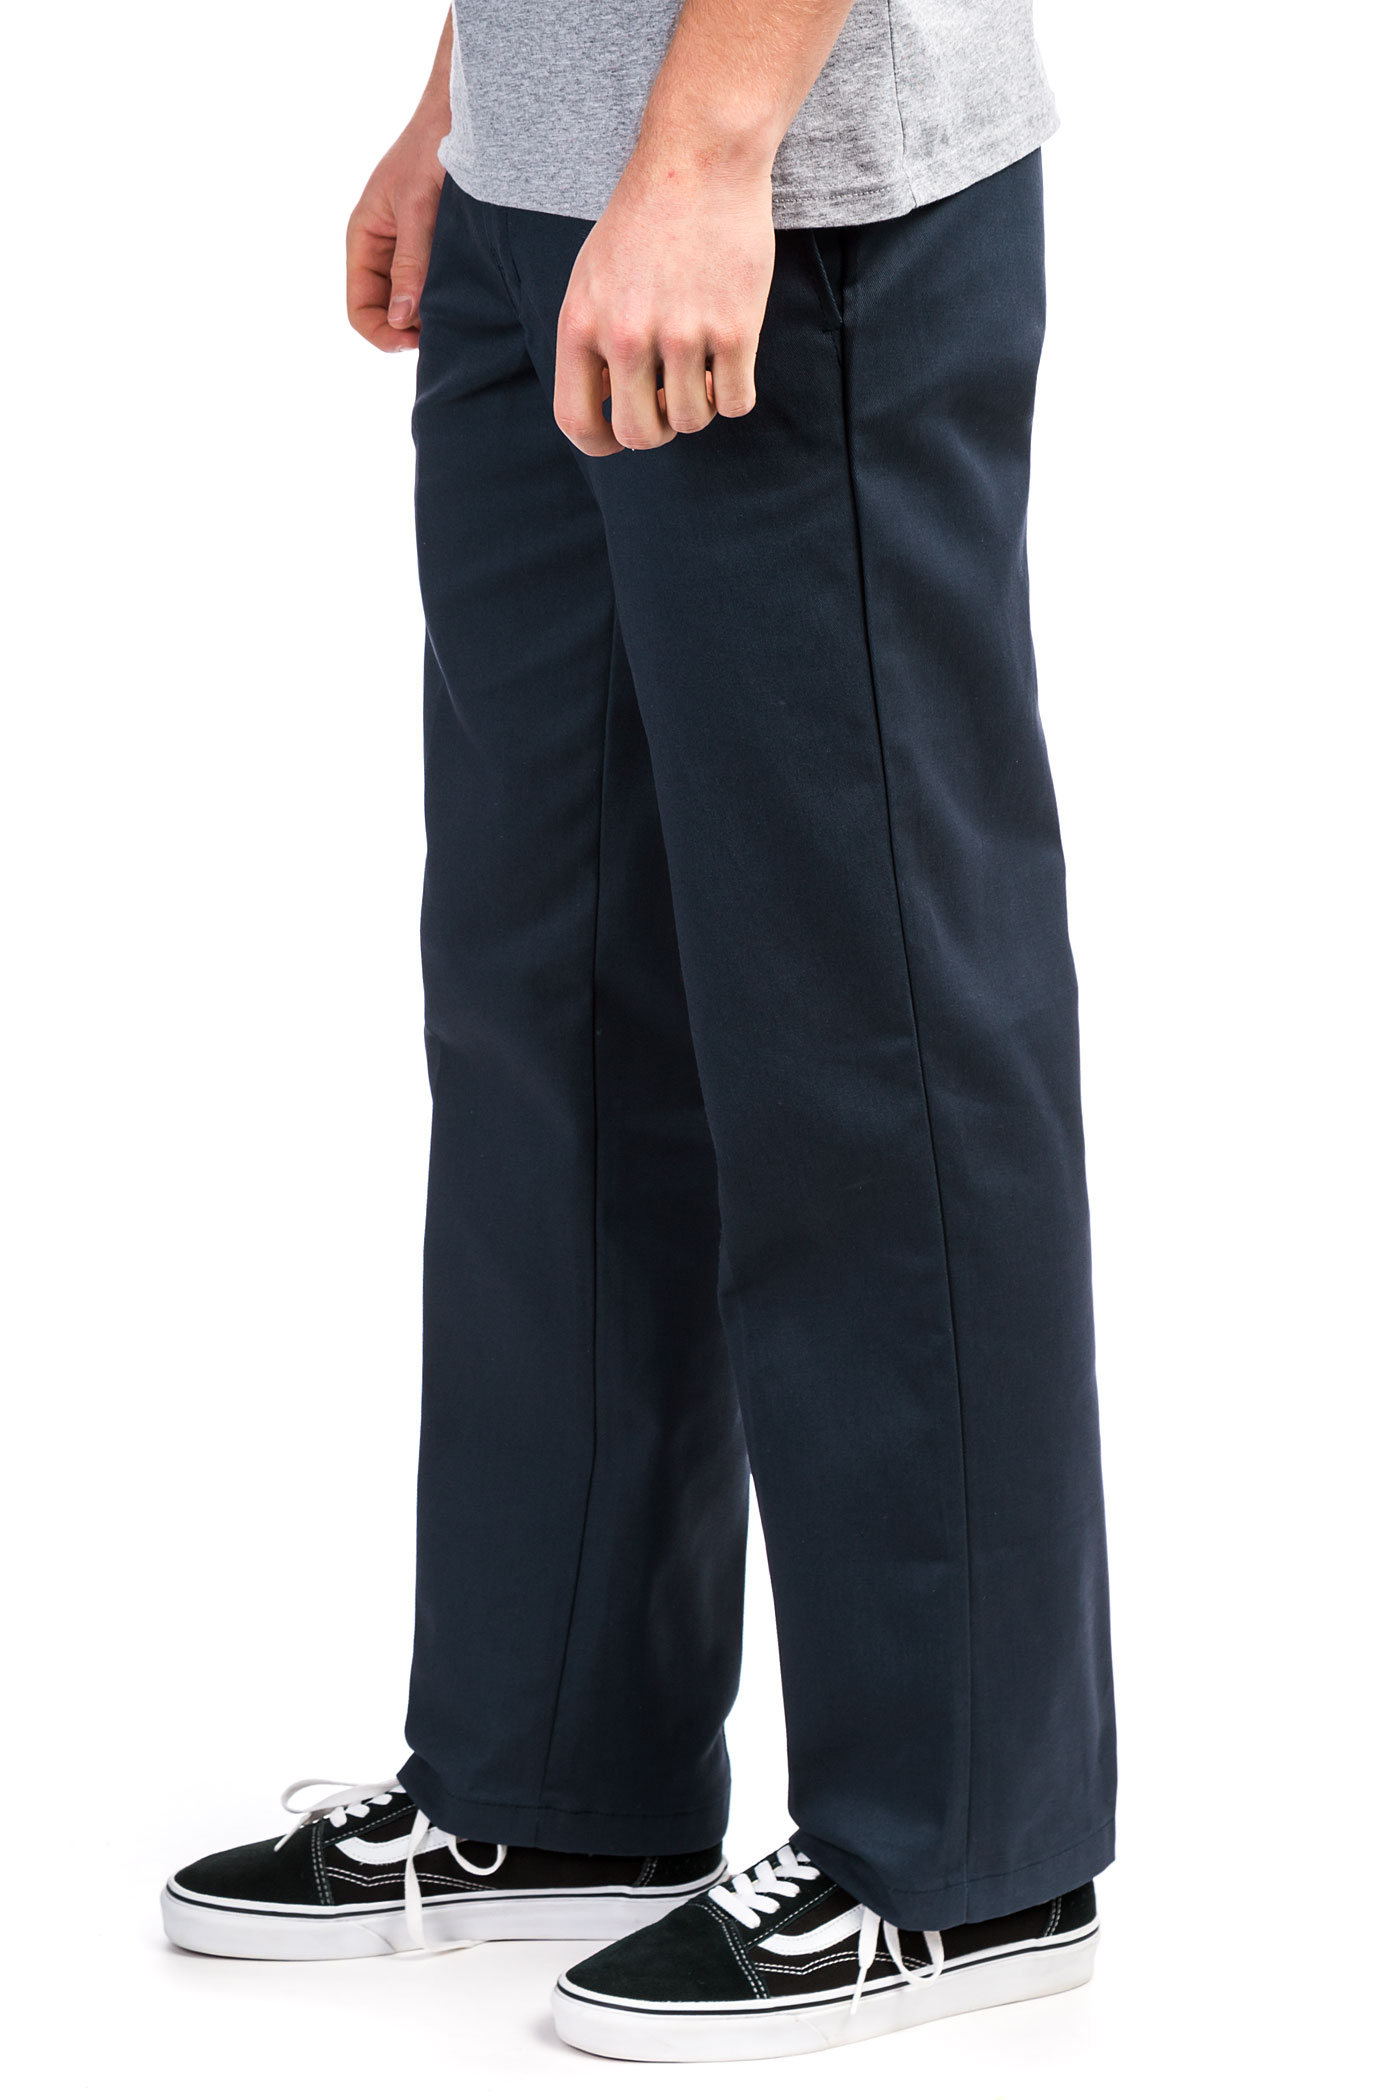 Dickies O-Dog 874 Workpant Pants (navy blue) buy at skatedeluxe